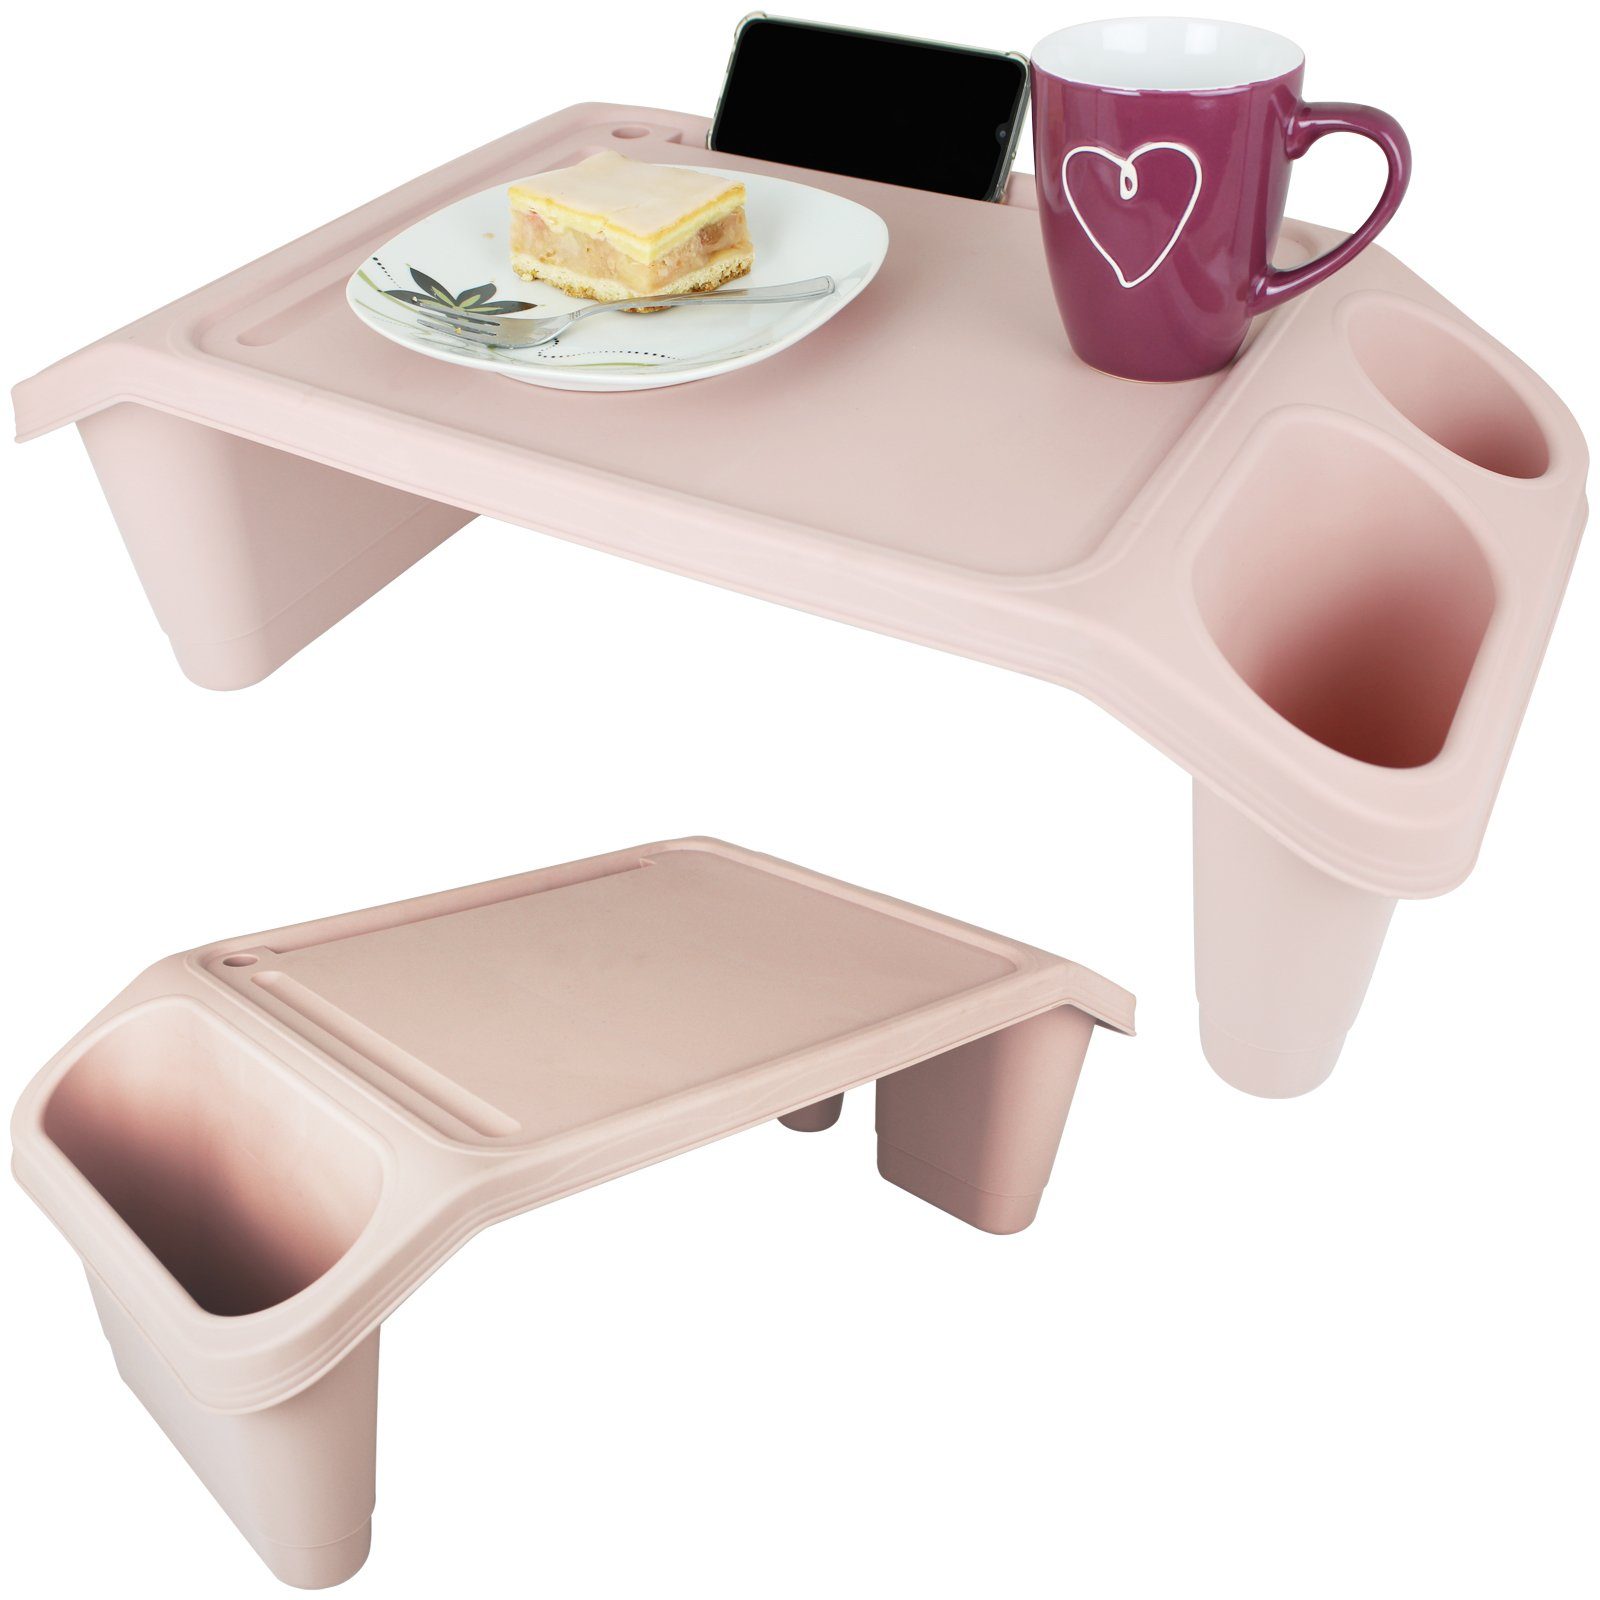 Koopman Tabletttisch Bett-Serviertablett Farbwahl Tablett Bett Tisch Serviertisch, Beistelltisch Couchtablett Betttisch Früchstück Frühstückstablett Rosa | Tabletttische